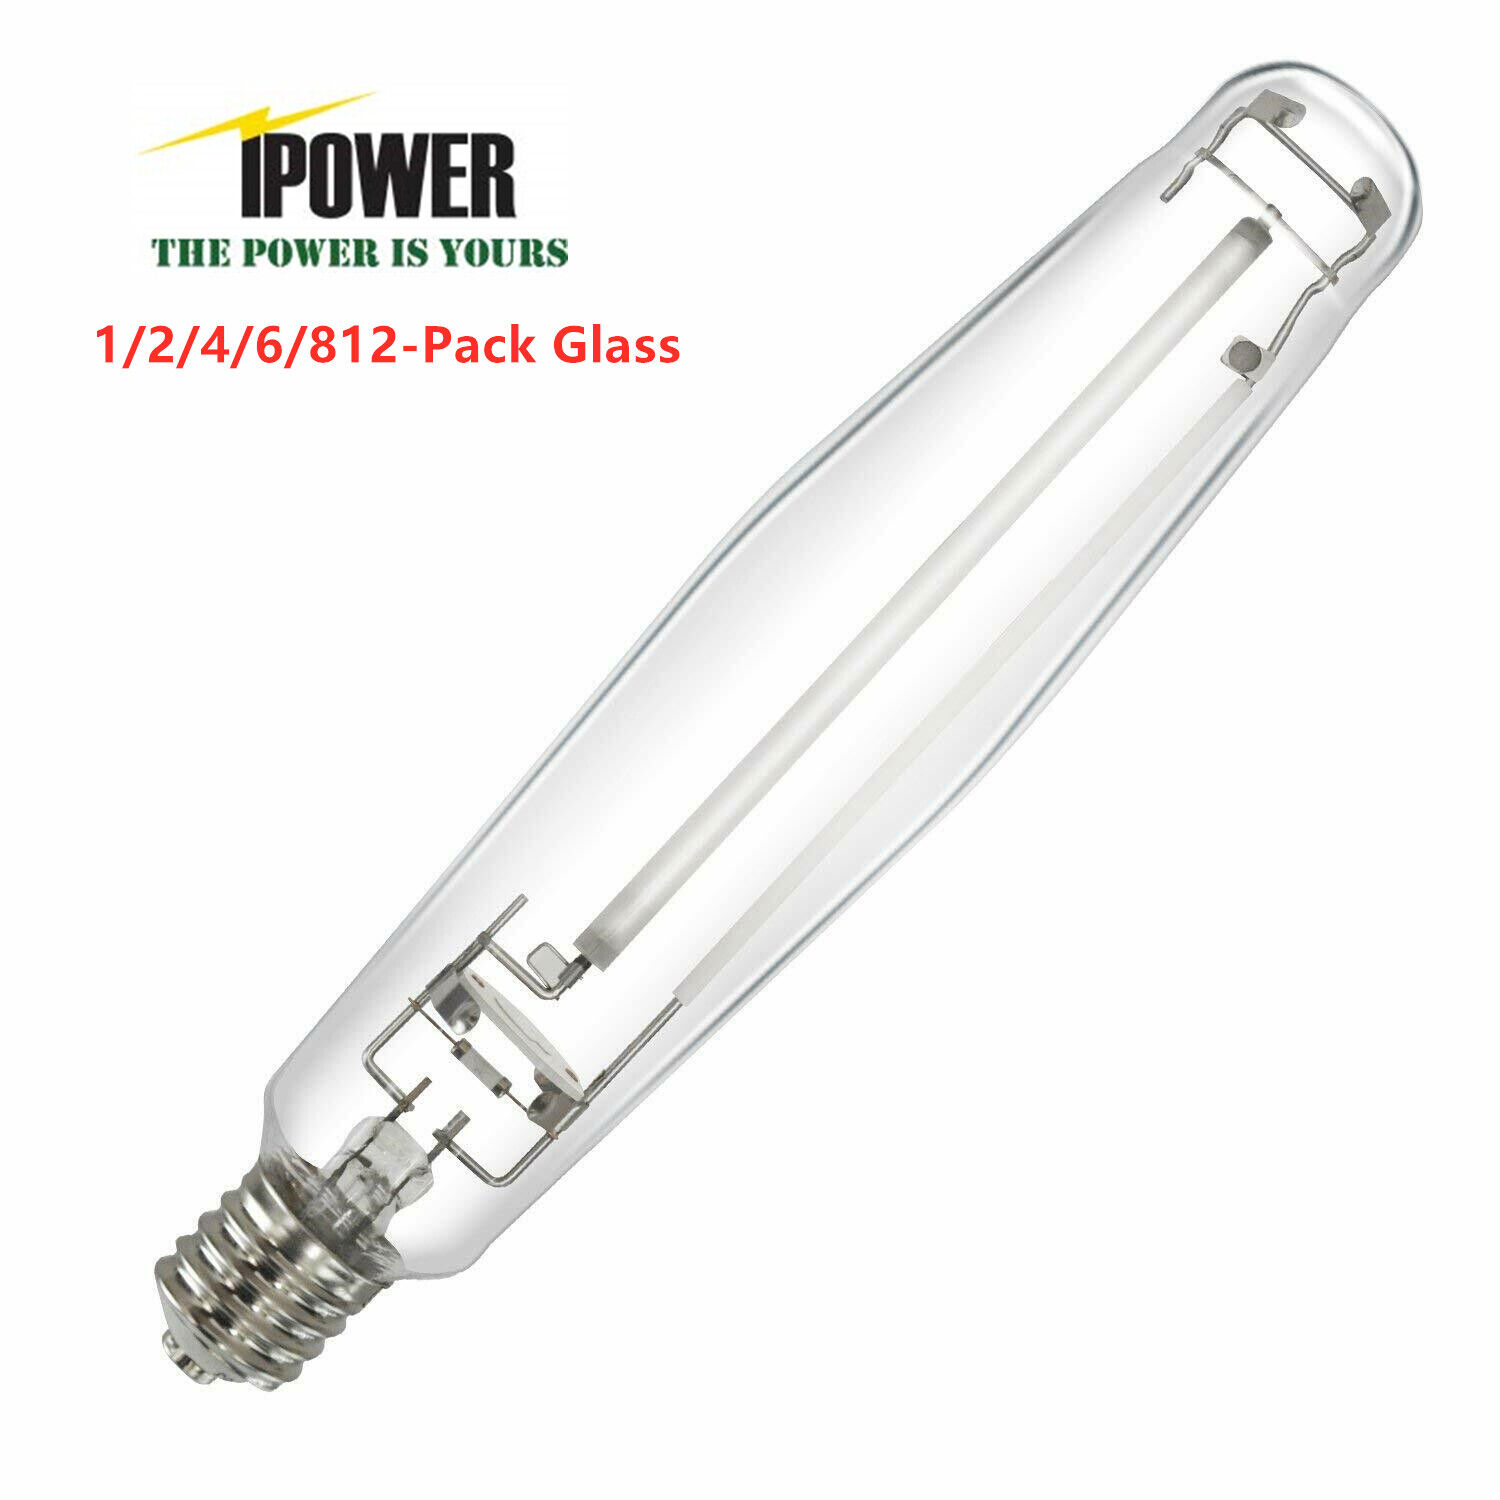 iPower 1000 Watt High Pressure Sodium HPS Grow Light Bulb Lamp 1/2/4/6/12-PACK